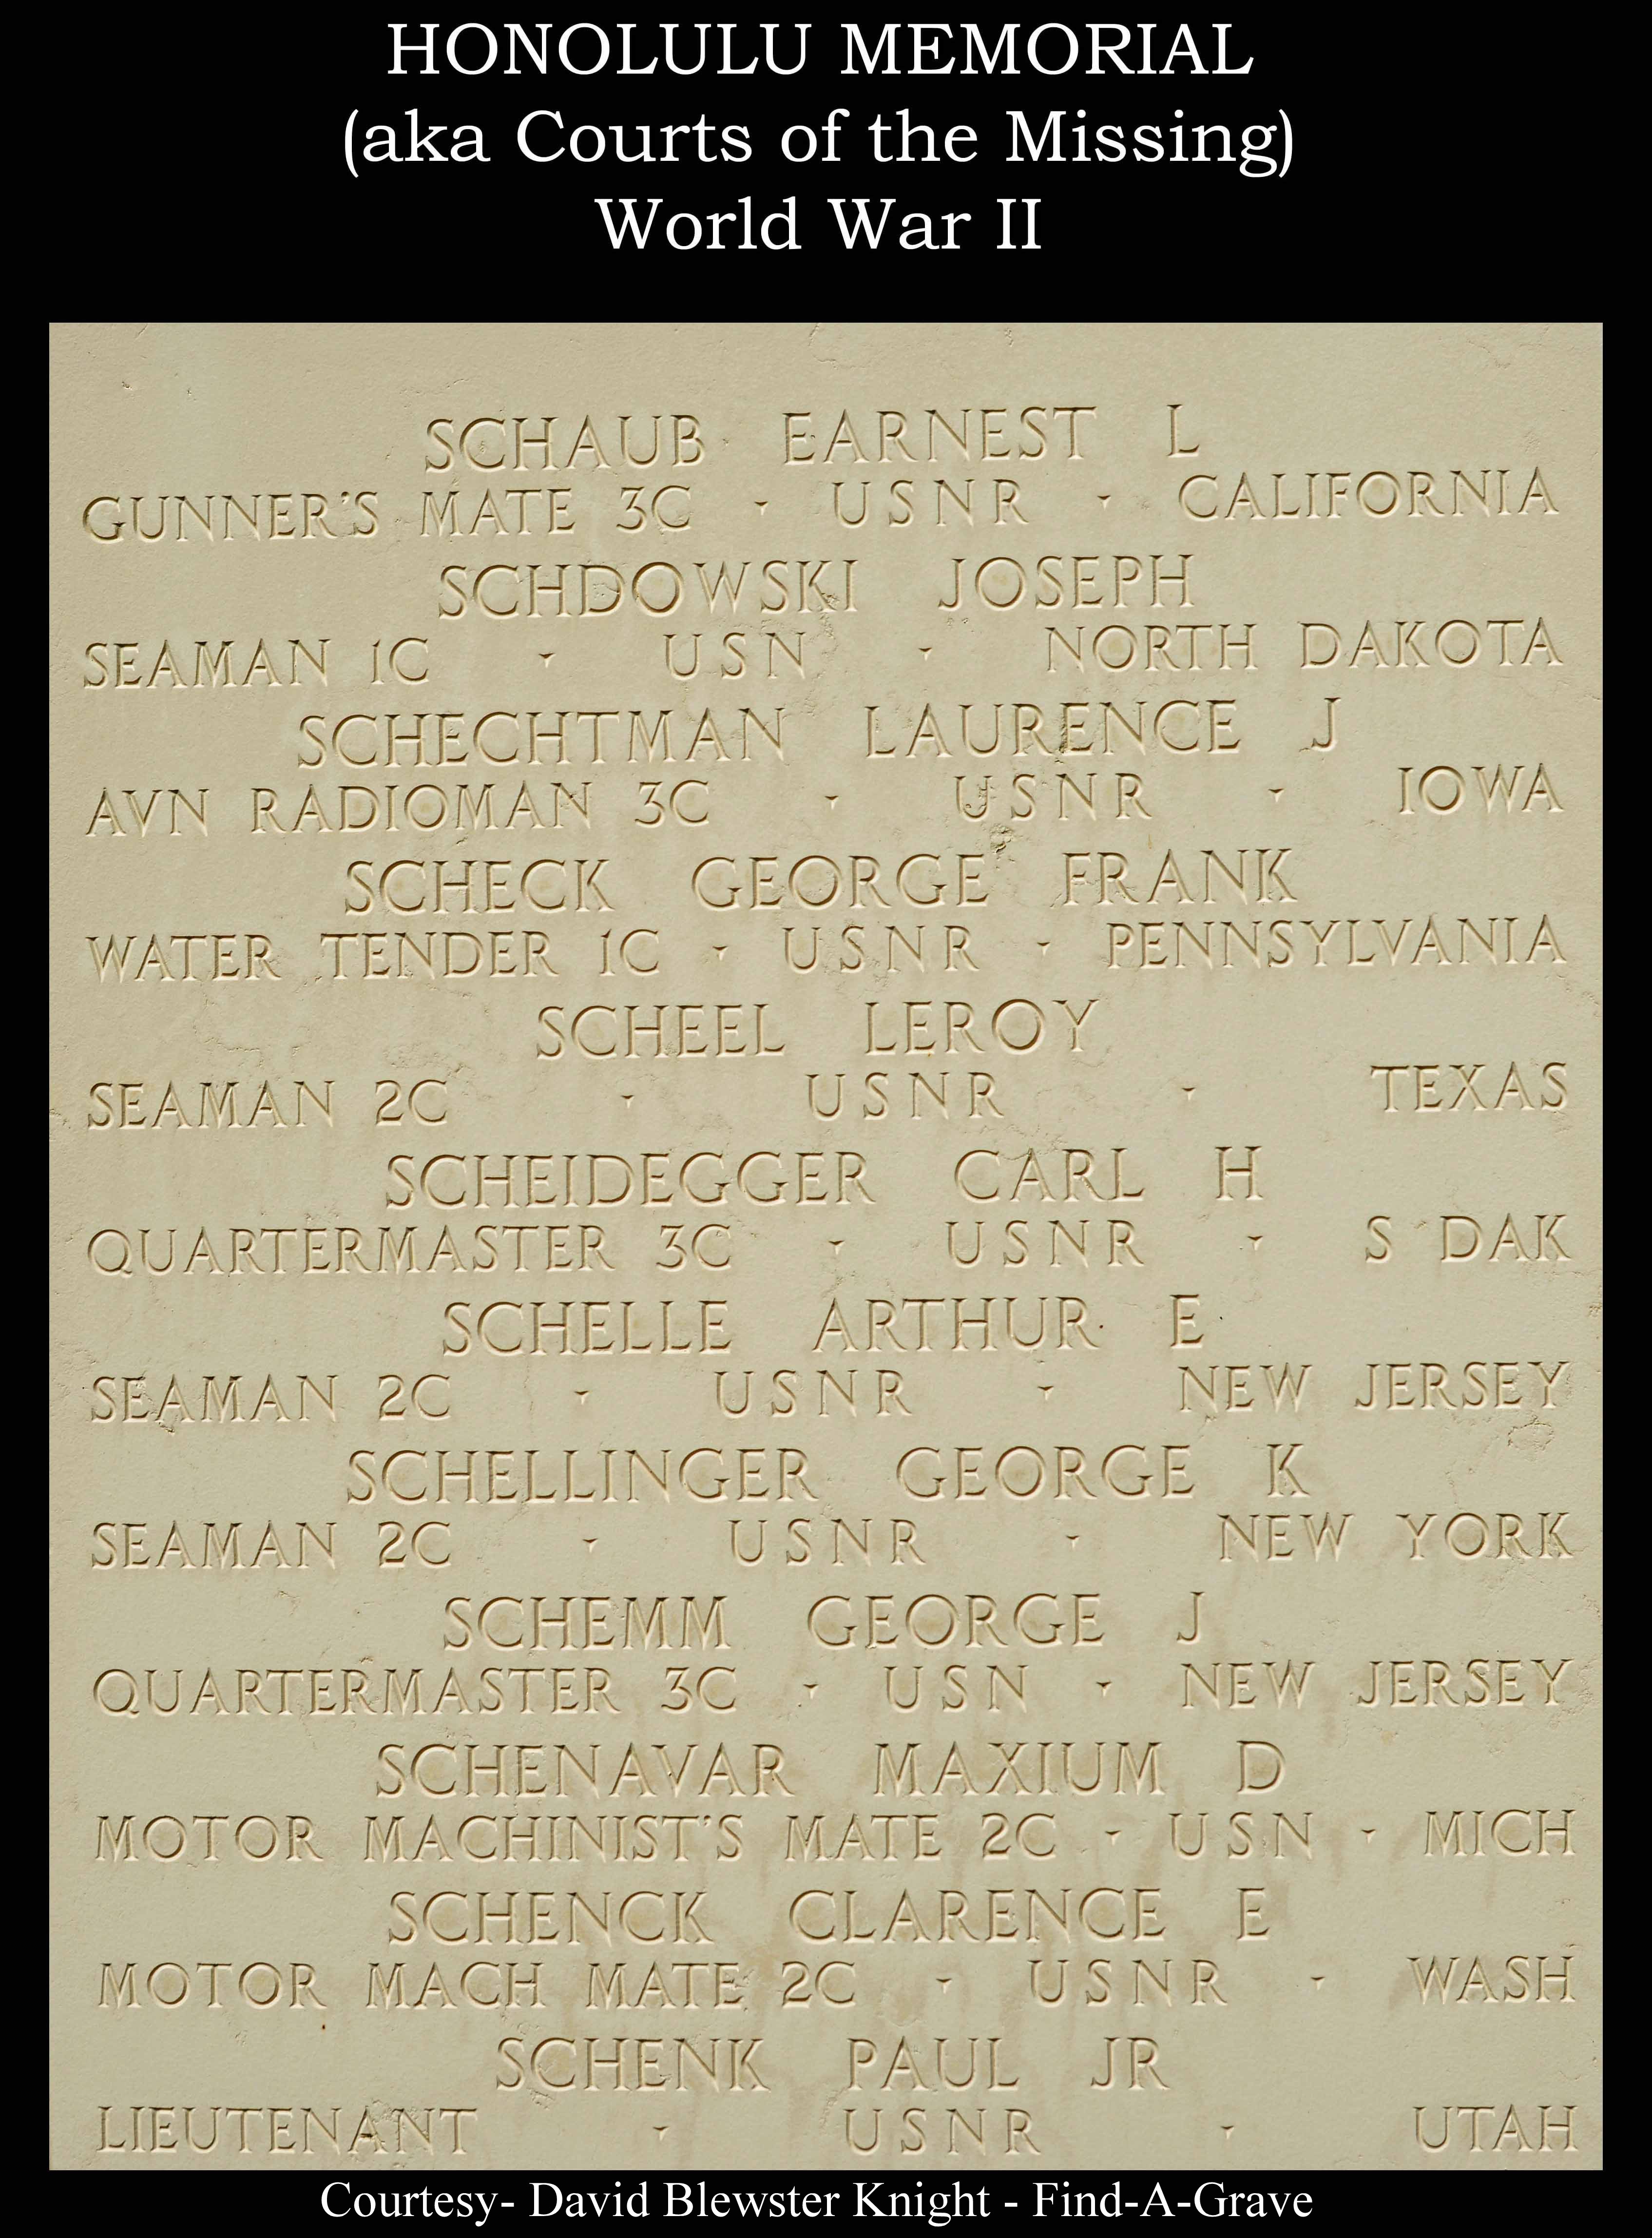 Q 3/C George Joseph Schemm was KIA in the South Pacific.